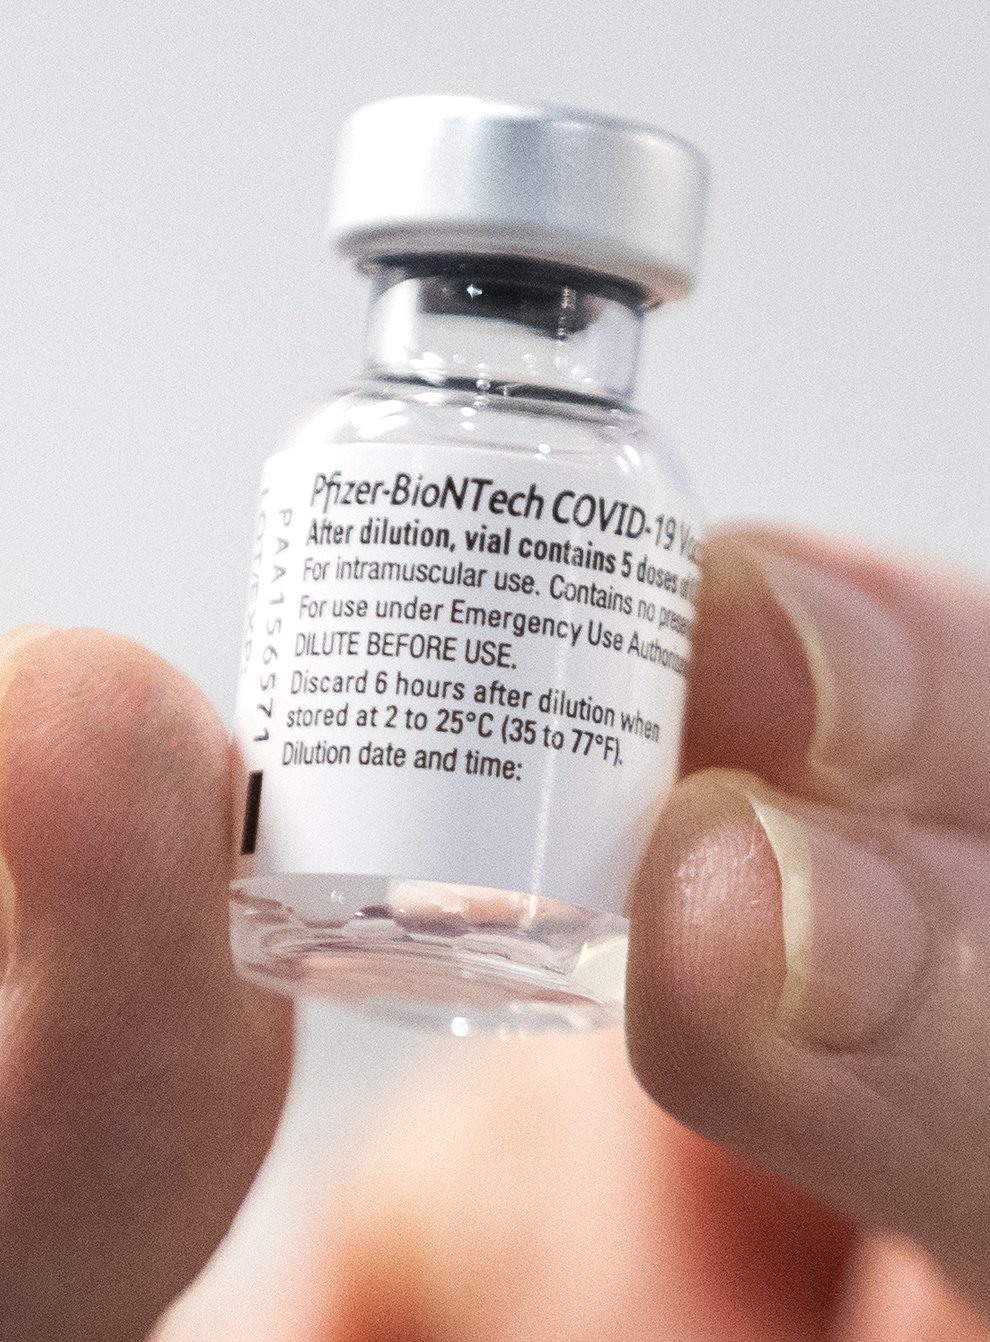 A vial of the Pfizer Covid-19 vaccine